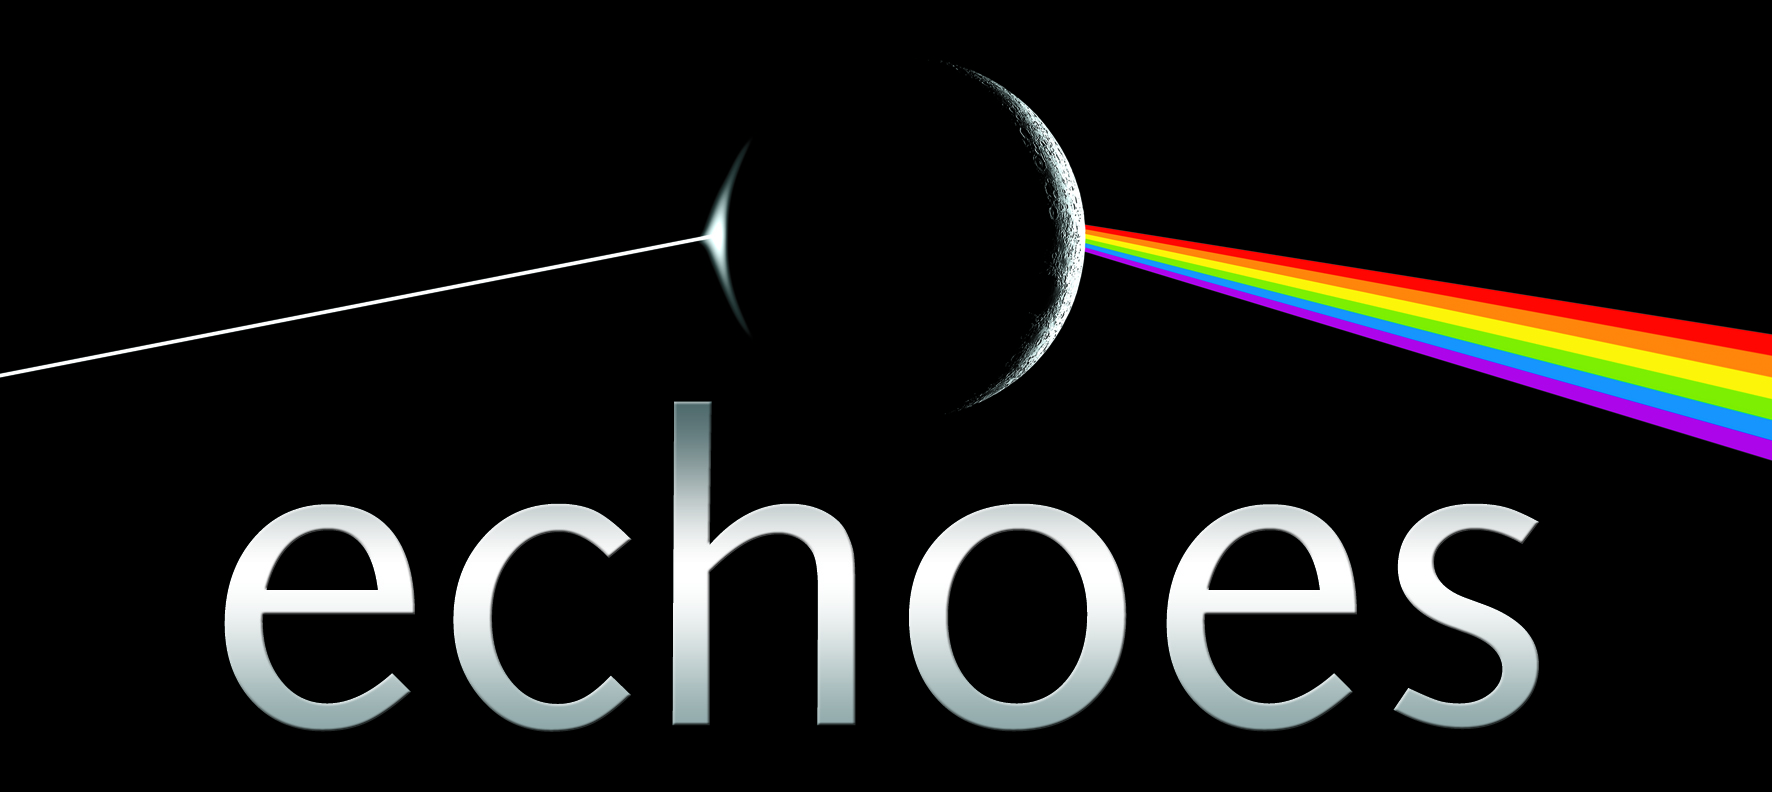 Echoes Logo